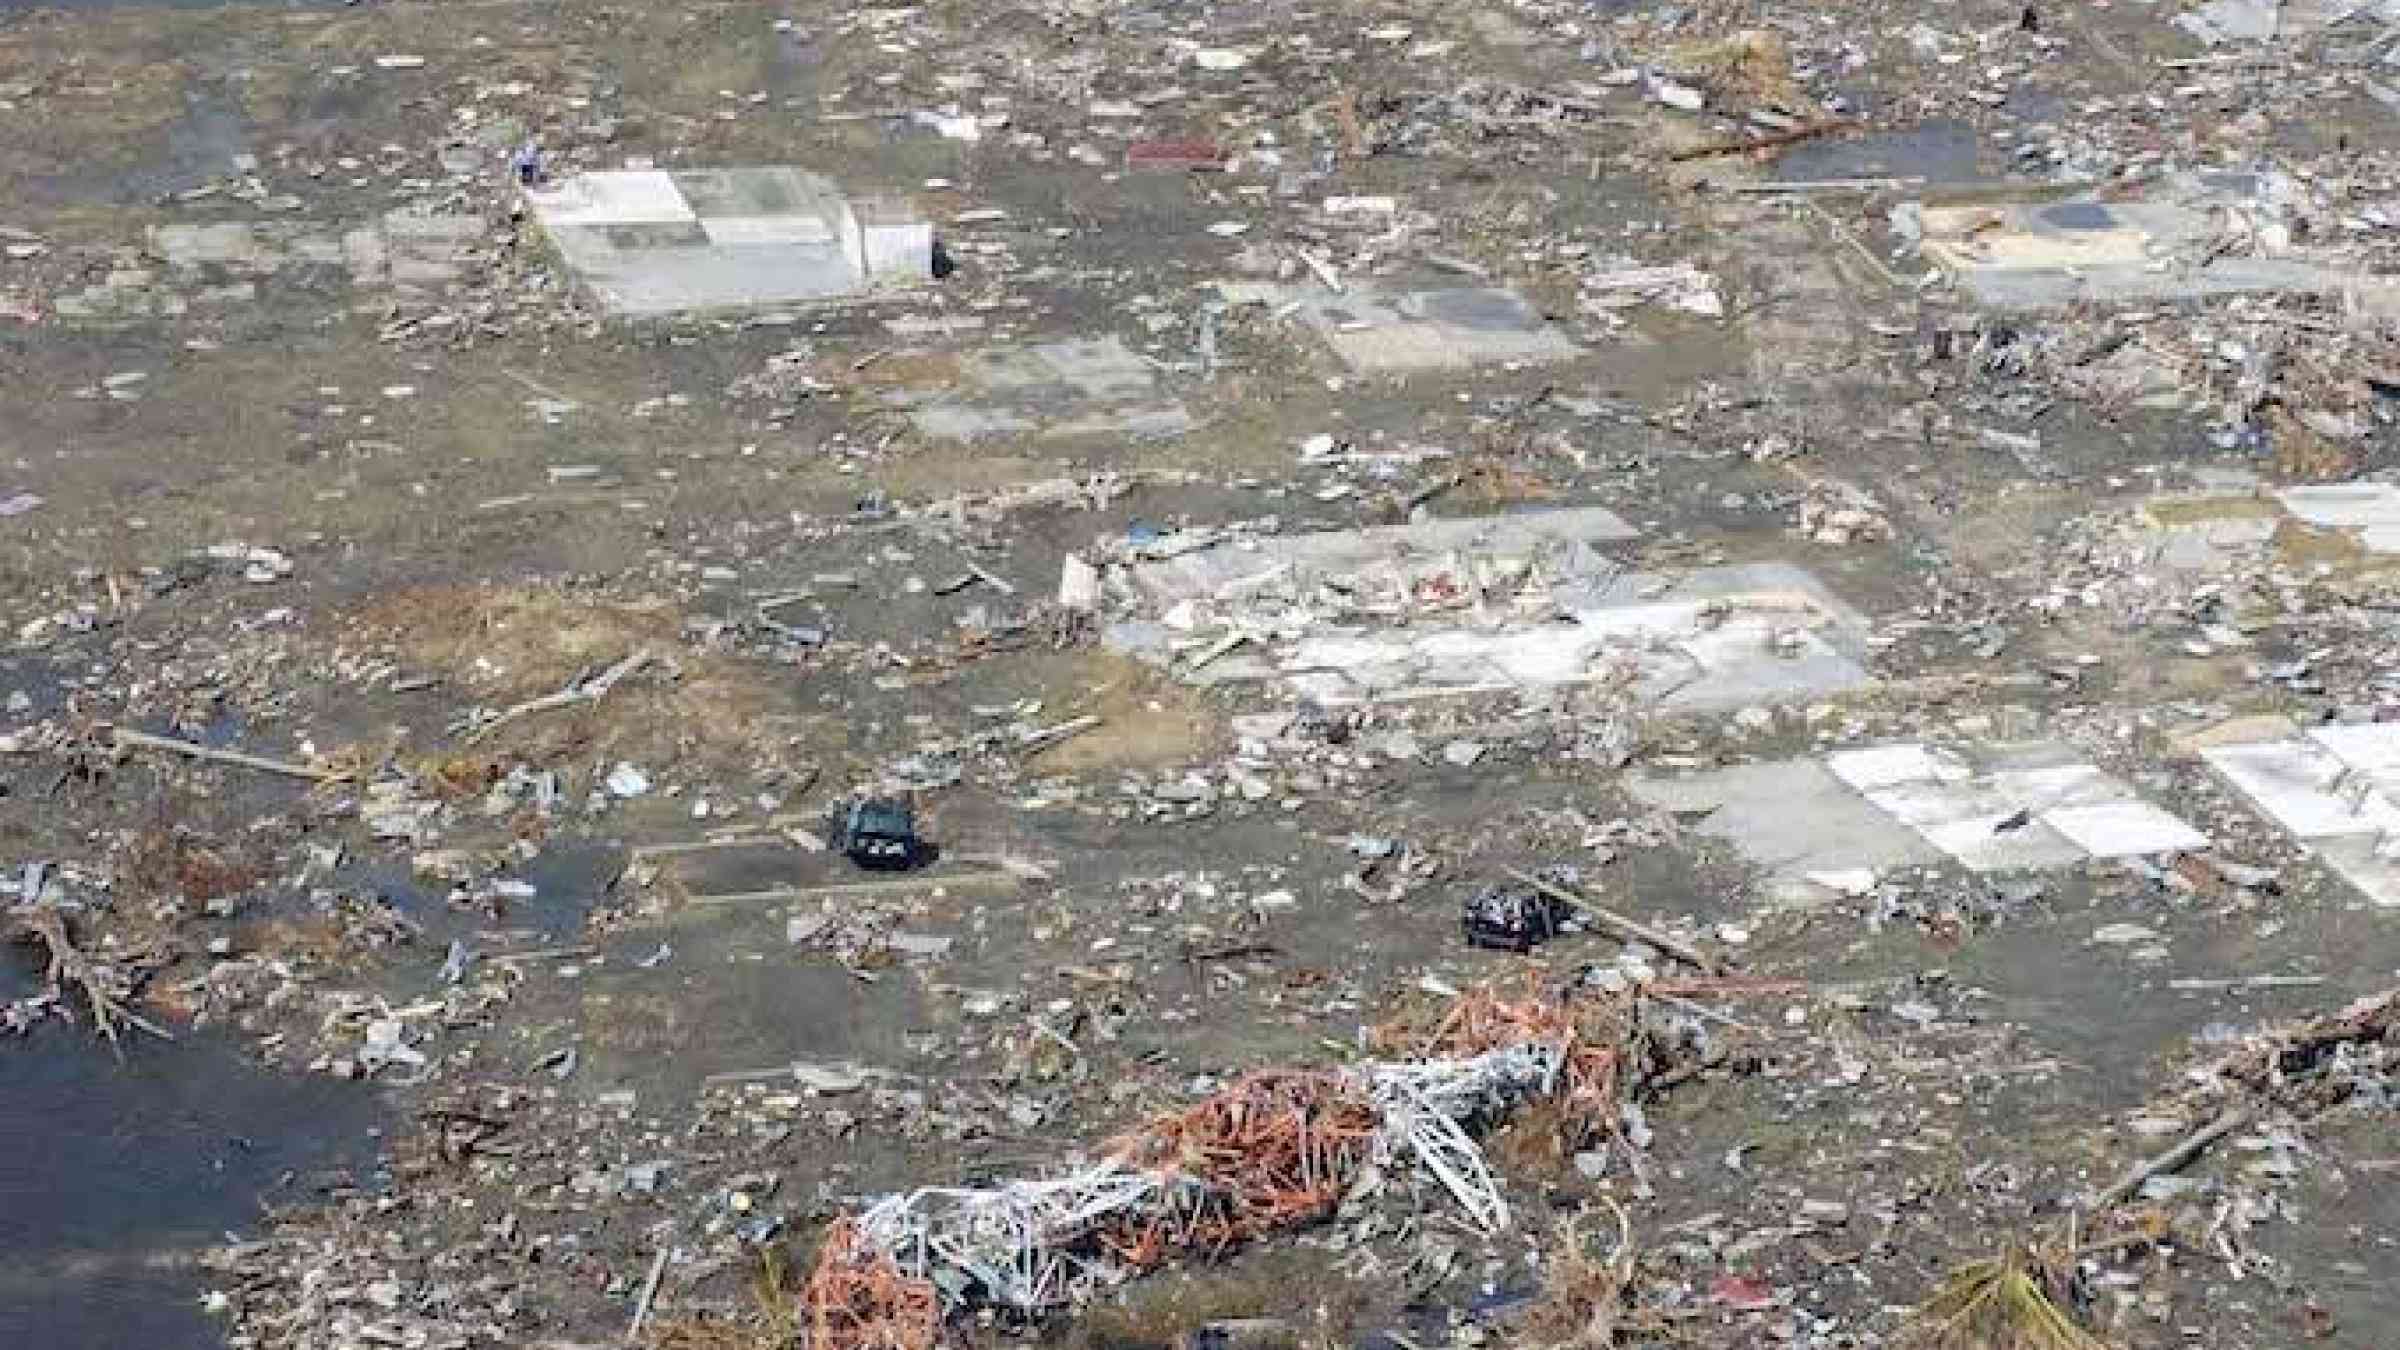 UN Photo/Evan Schneider - Aftermath of Indian Ocean Tsunami http://bit.ly/39ouEMp